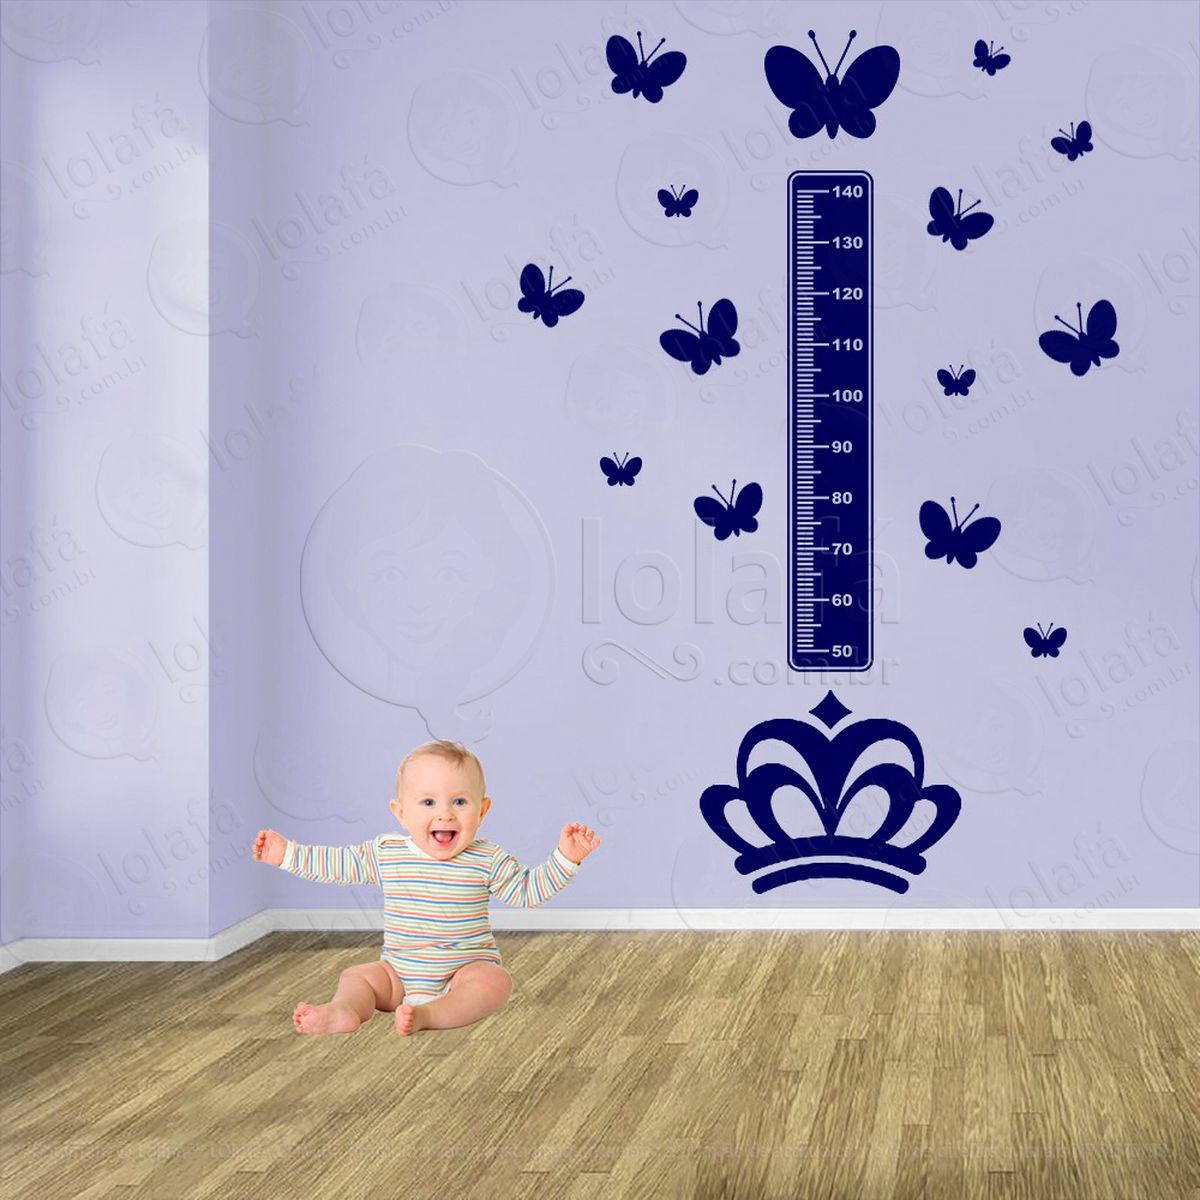 coroa e borboletas adesivo régua de crescimento infantil, medidor de altura para quarto, porta e parede - mod:585